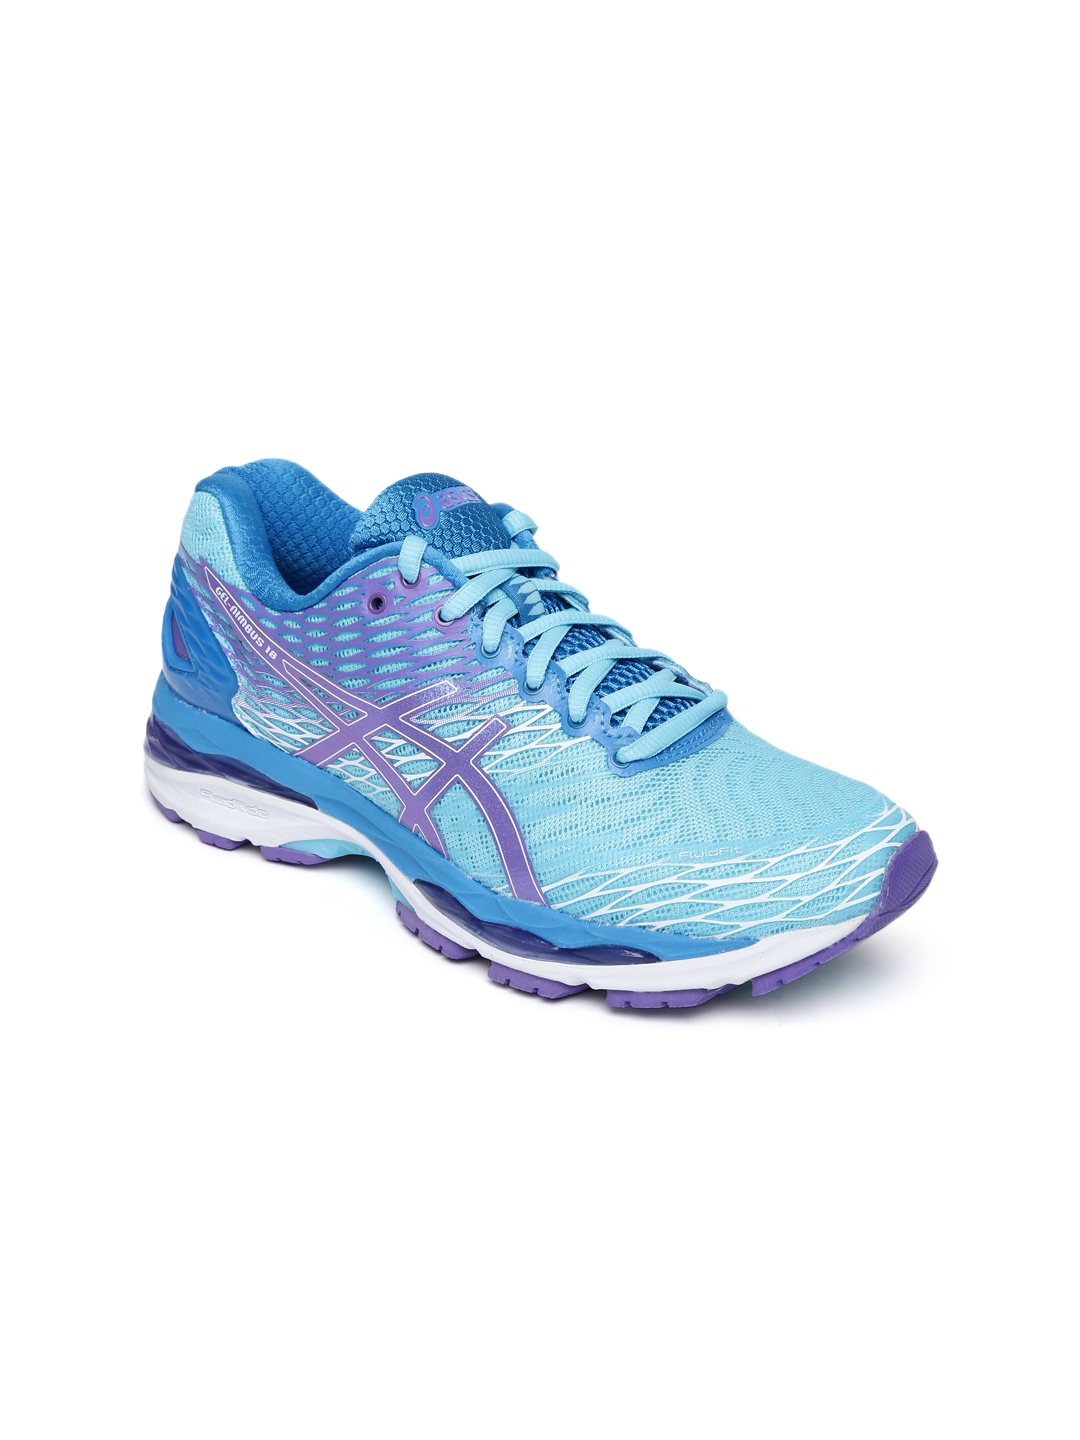 Buy ASICS Women Turquoise Blue GEL NIMBUS 18 Running Shoes - Sports ...